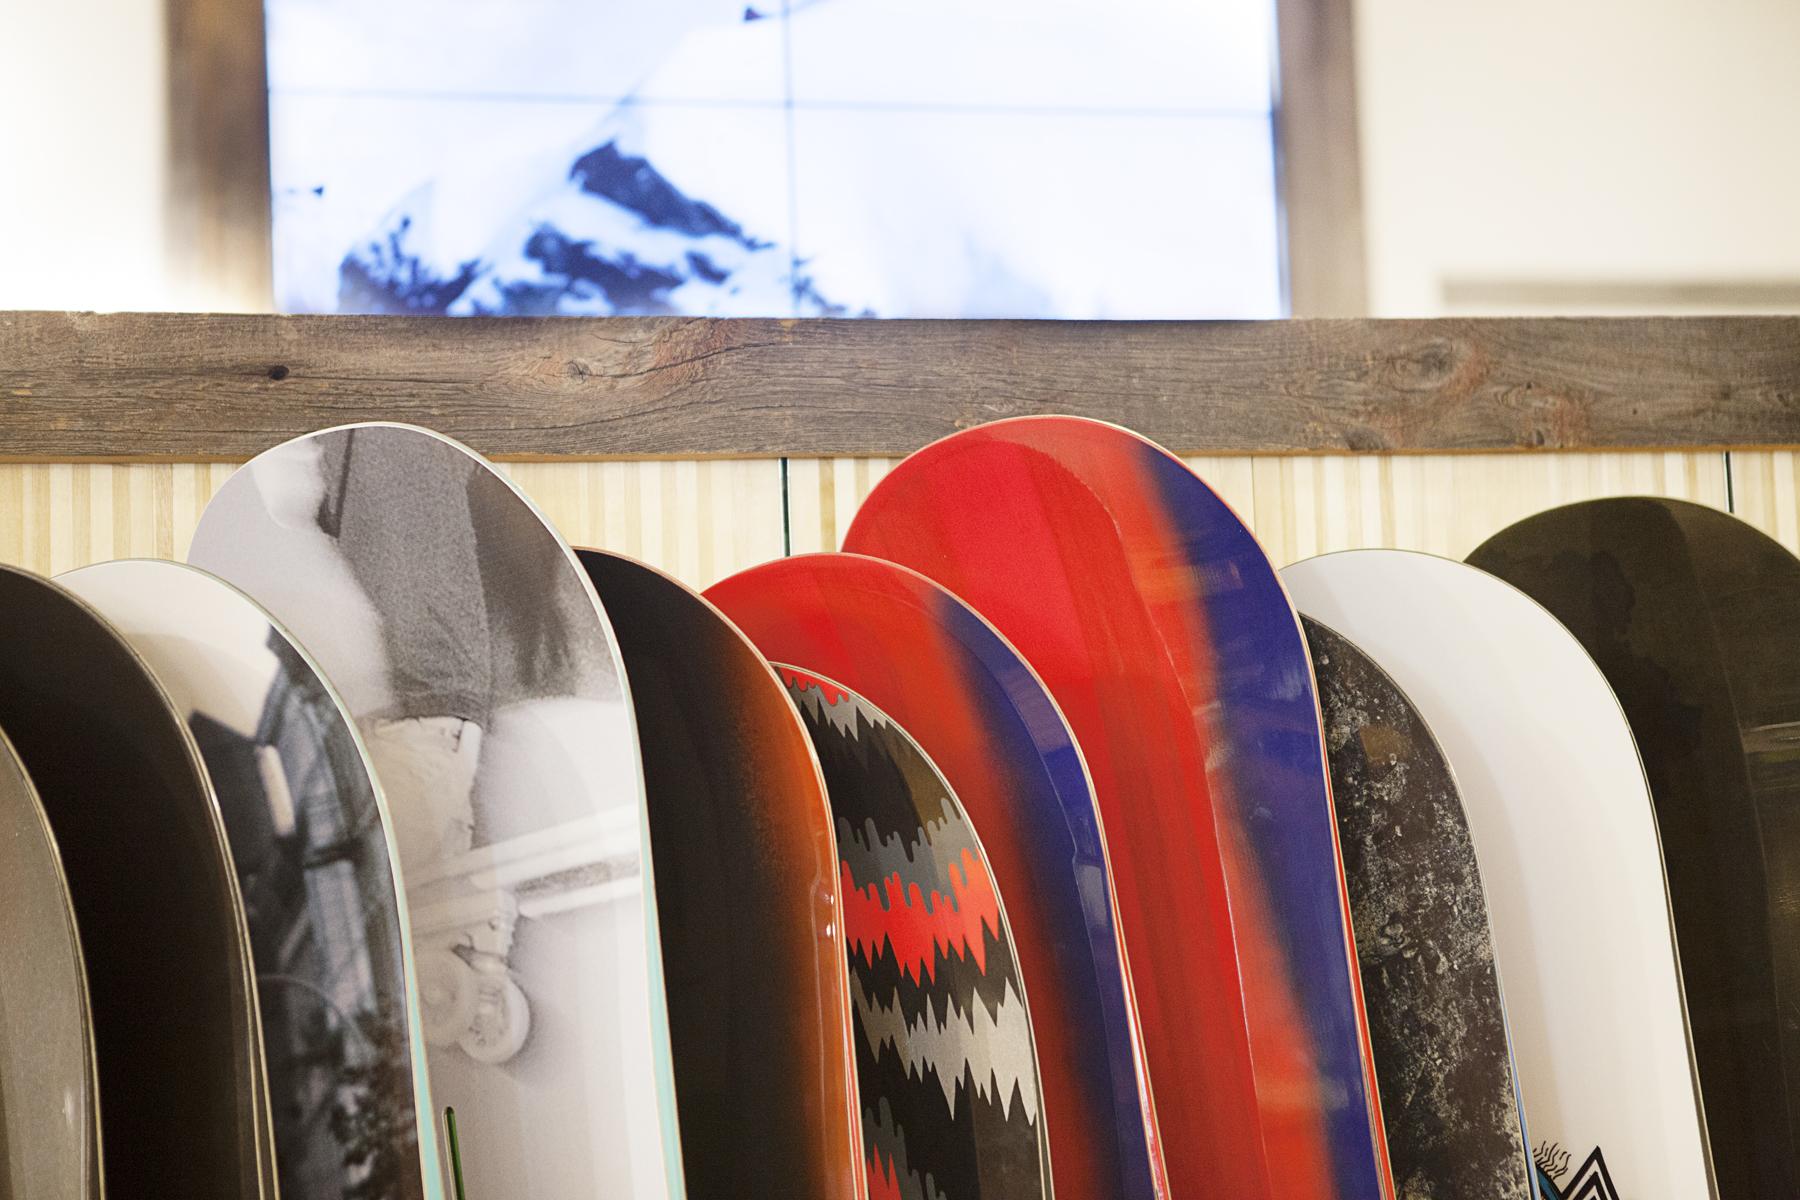 Burton Snowboards. Tobin Parnes Design. NY. Retail Design. Snowboard Display.